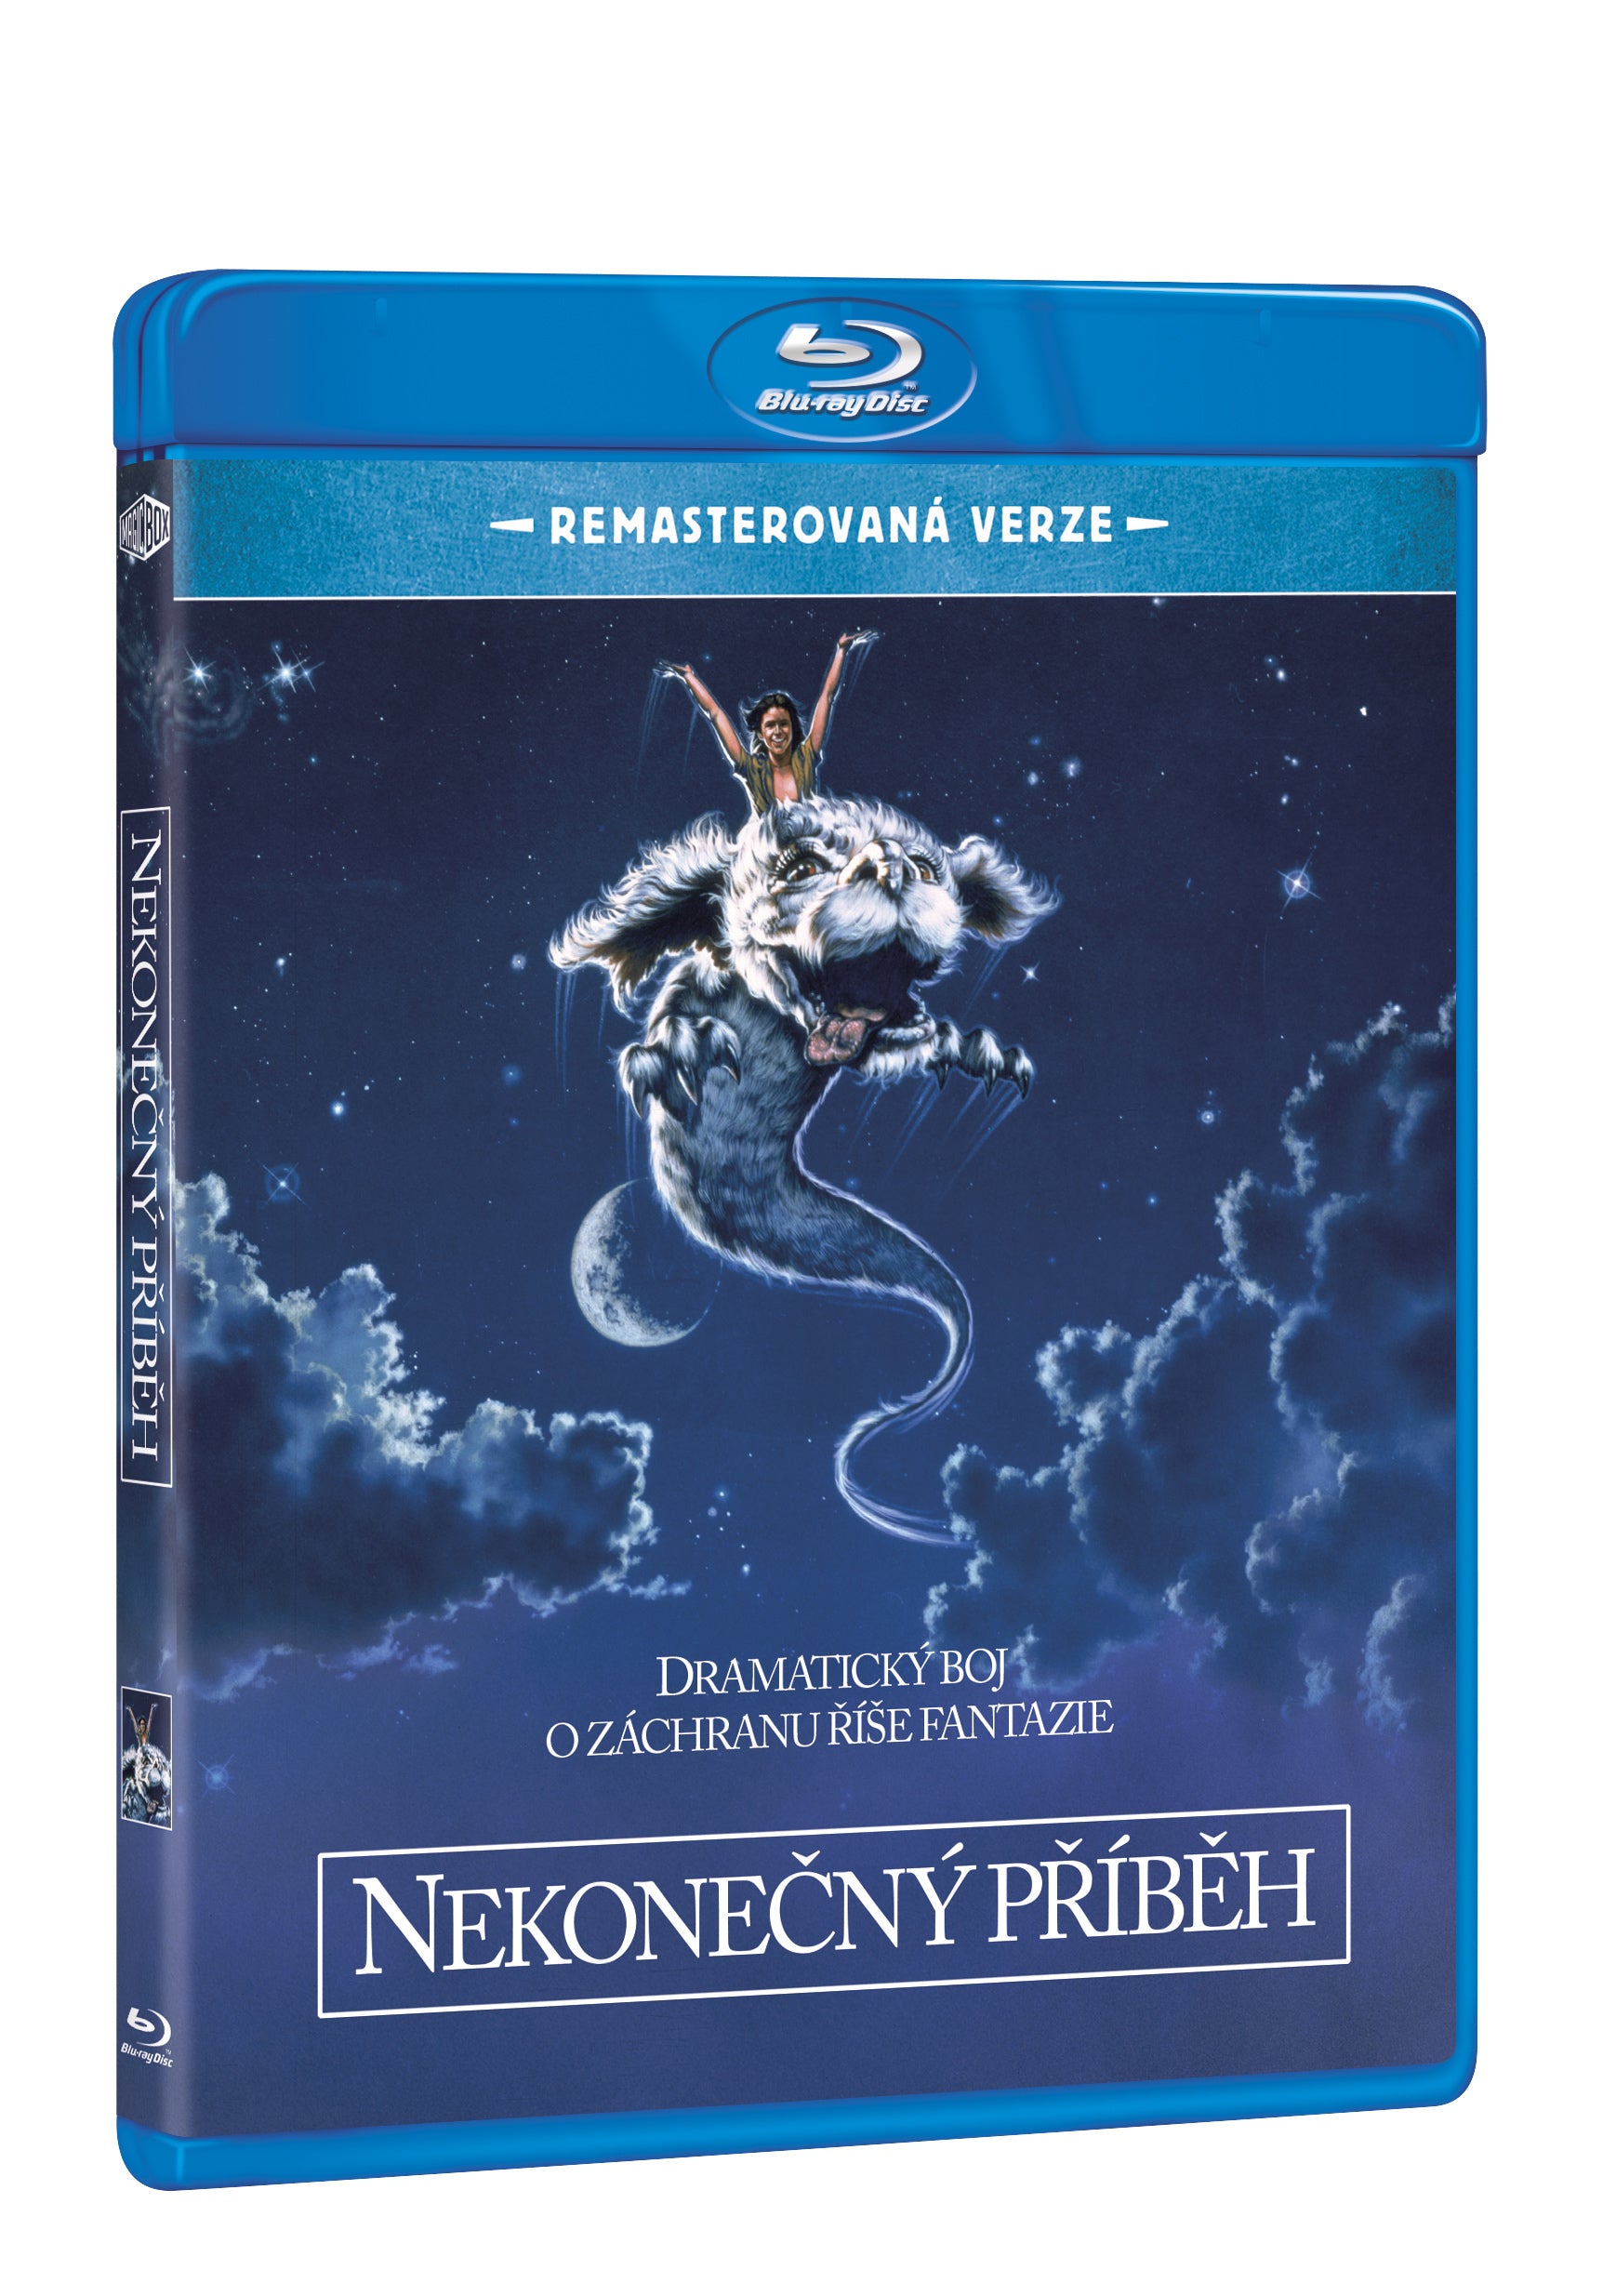 Nekonecny pribeh - remasterovana verze (Blu-ray) (The Neverending Story)